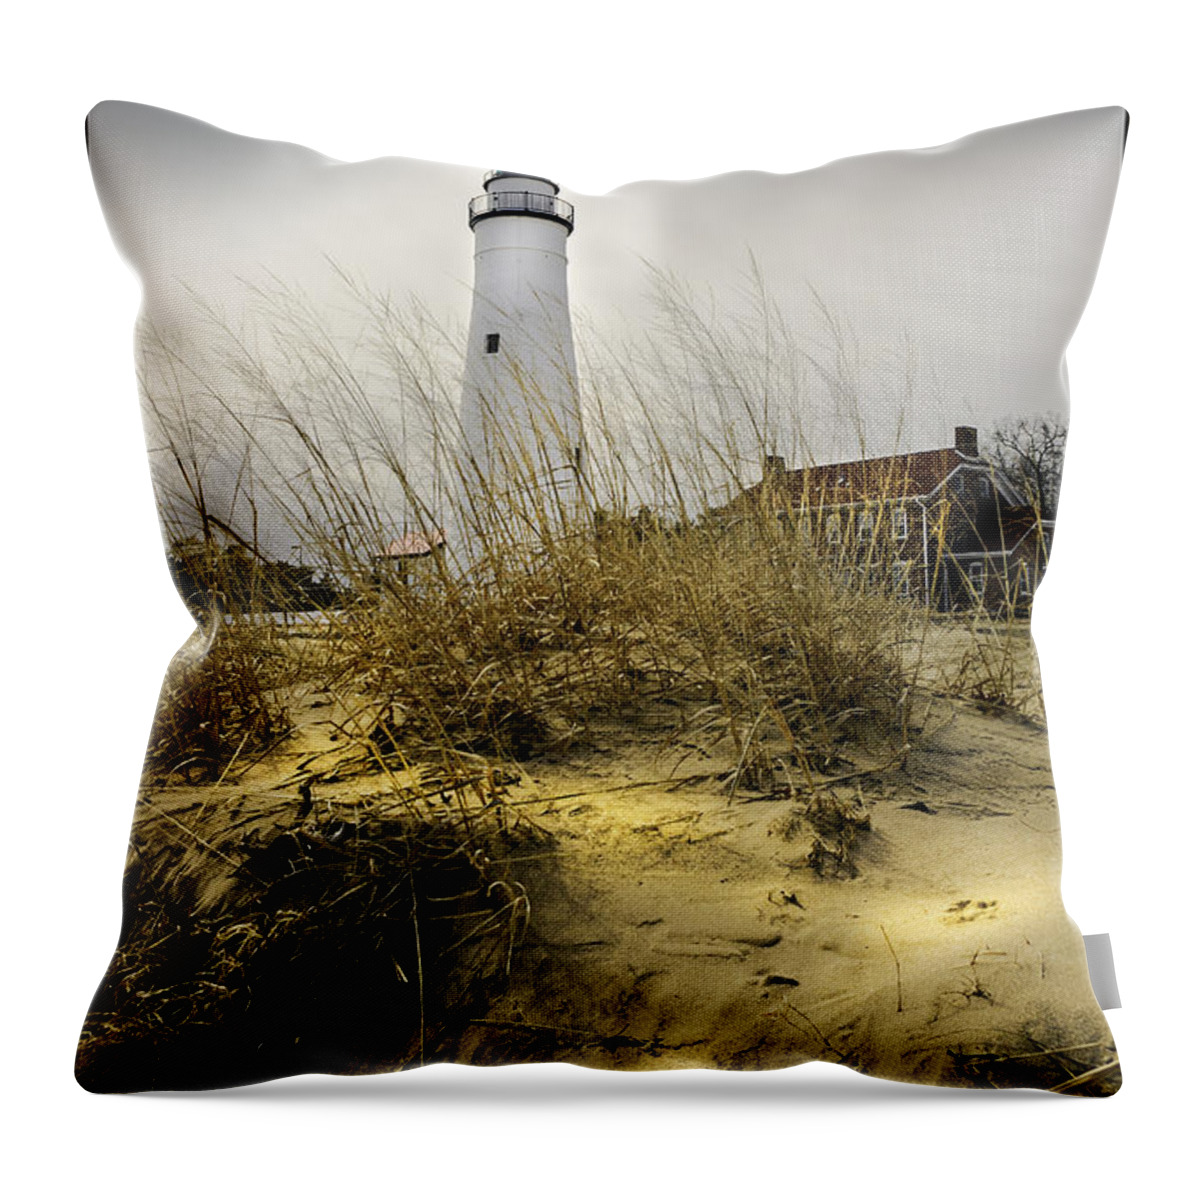 Usa Throw Pillow featuring the photograph The LightHouse beach at Fort Gratiot Michigan by LeeAnn McLaneGoetz McLaneGoetzStudioLLCcom